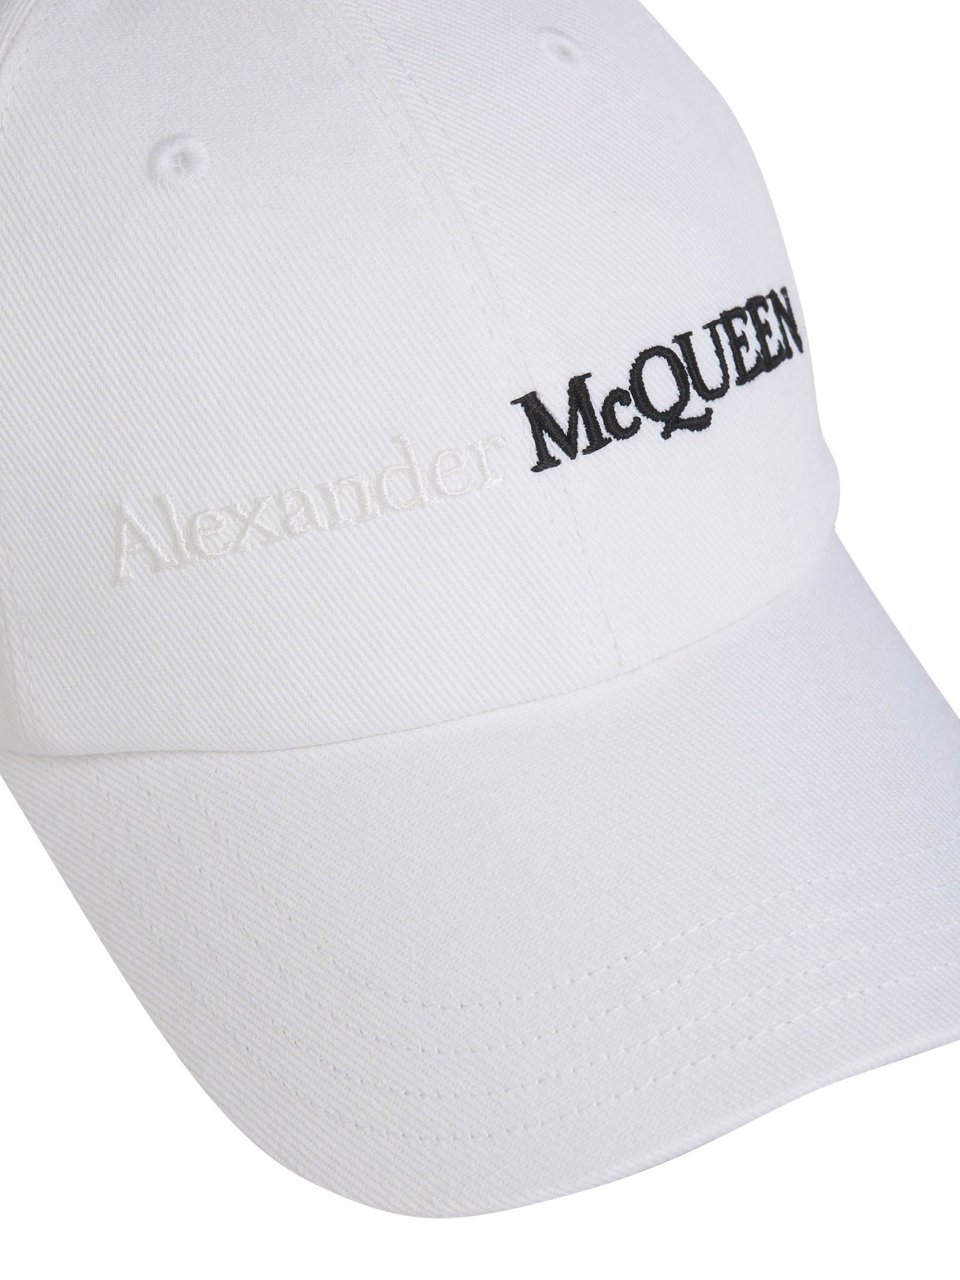 Alexander McQueen Cotton Logo Cap Wit